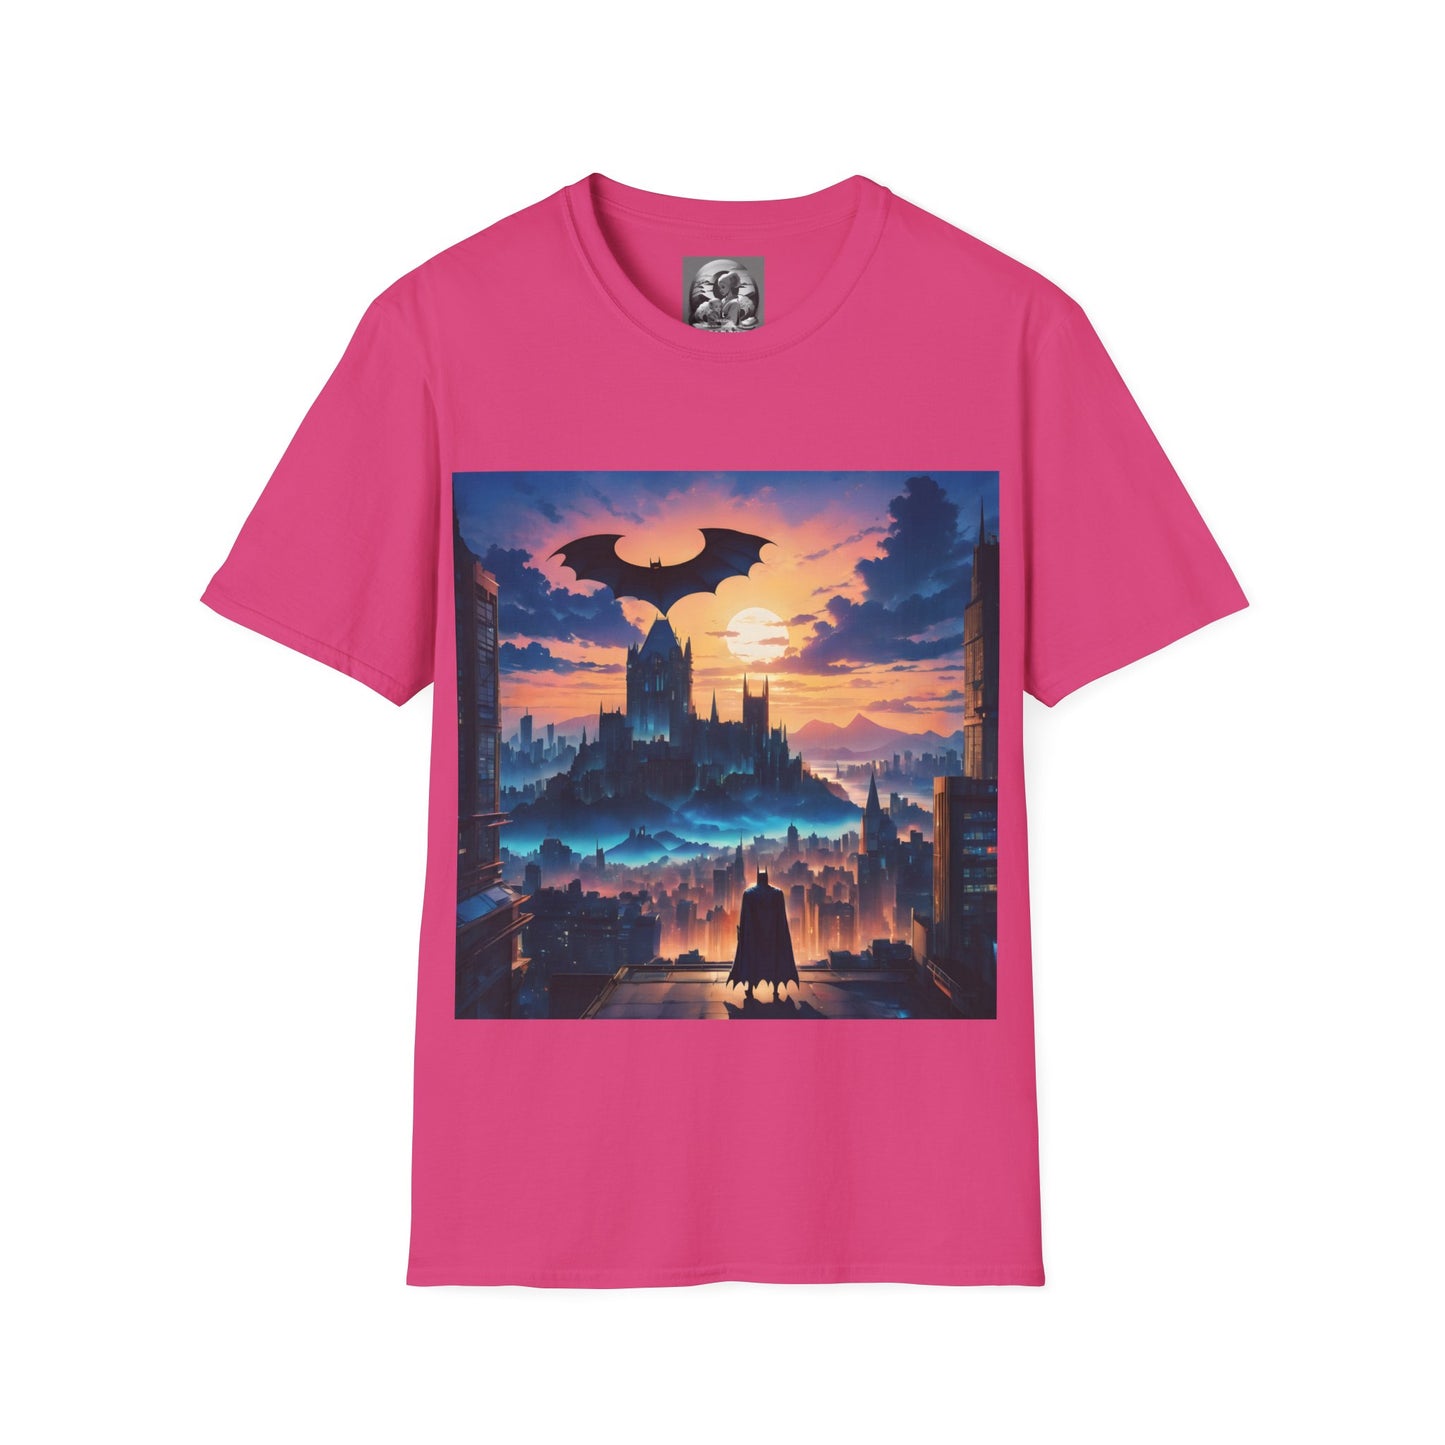 " The Dark Knight watching" Single Print Unisex Softstyle T-Shirt